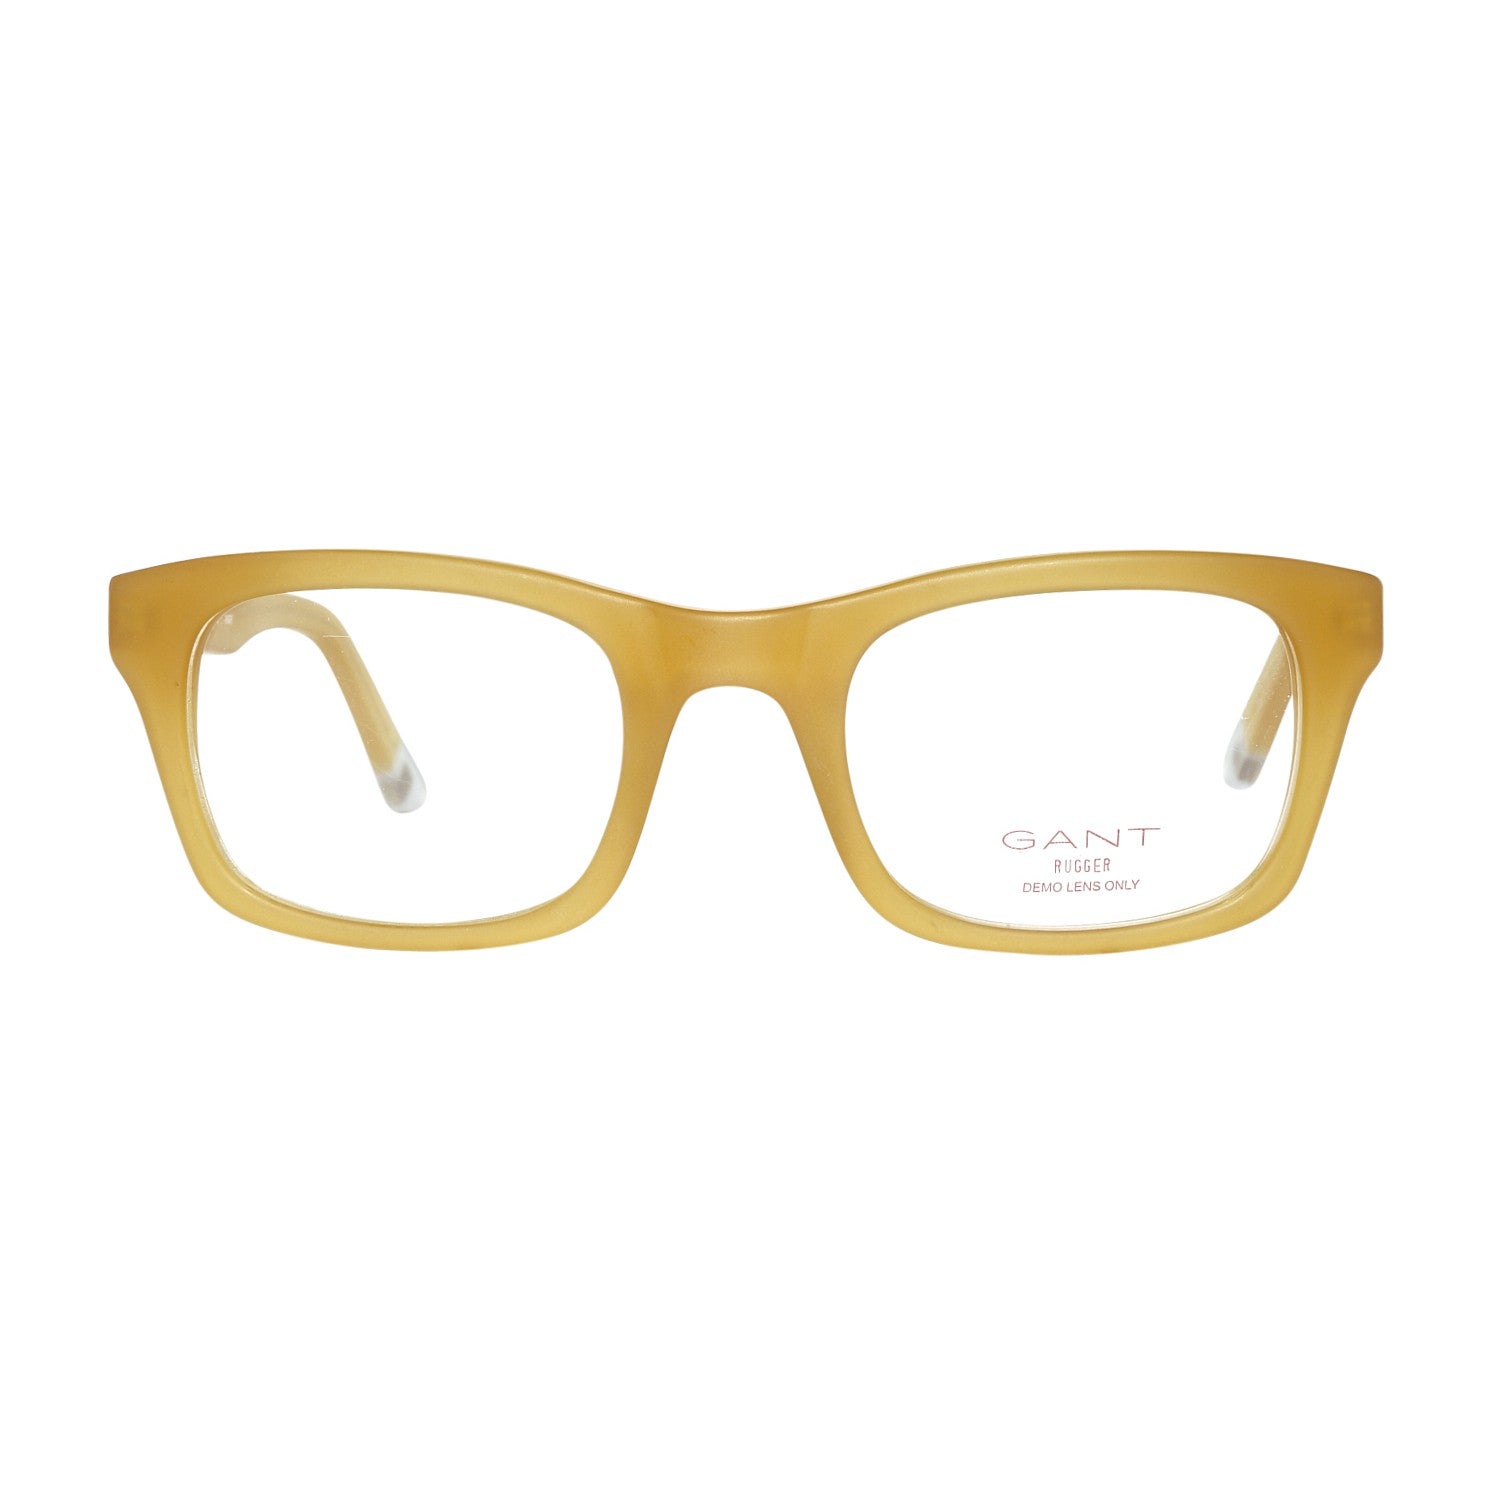 Gant Frames Gant Glasses Frames GRA103 L69 48 | GR 5007 MHNY 48 Eyeglasses Eyewear UK USA Australia 